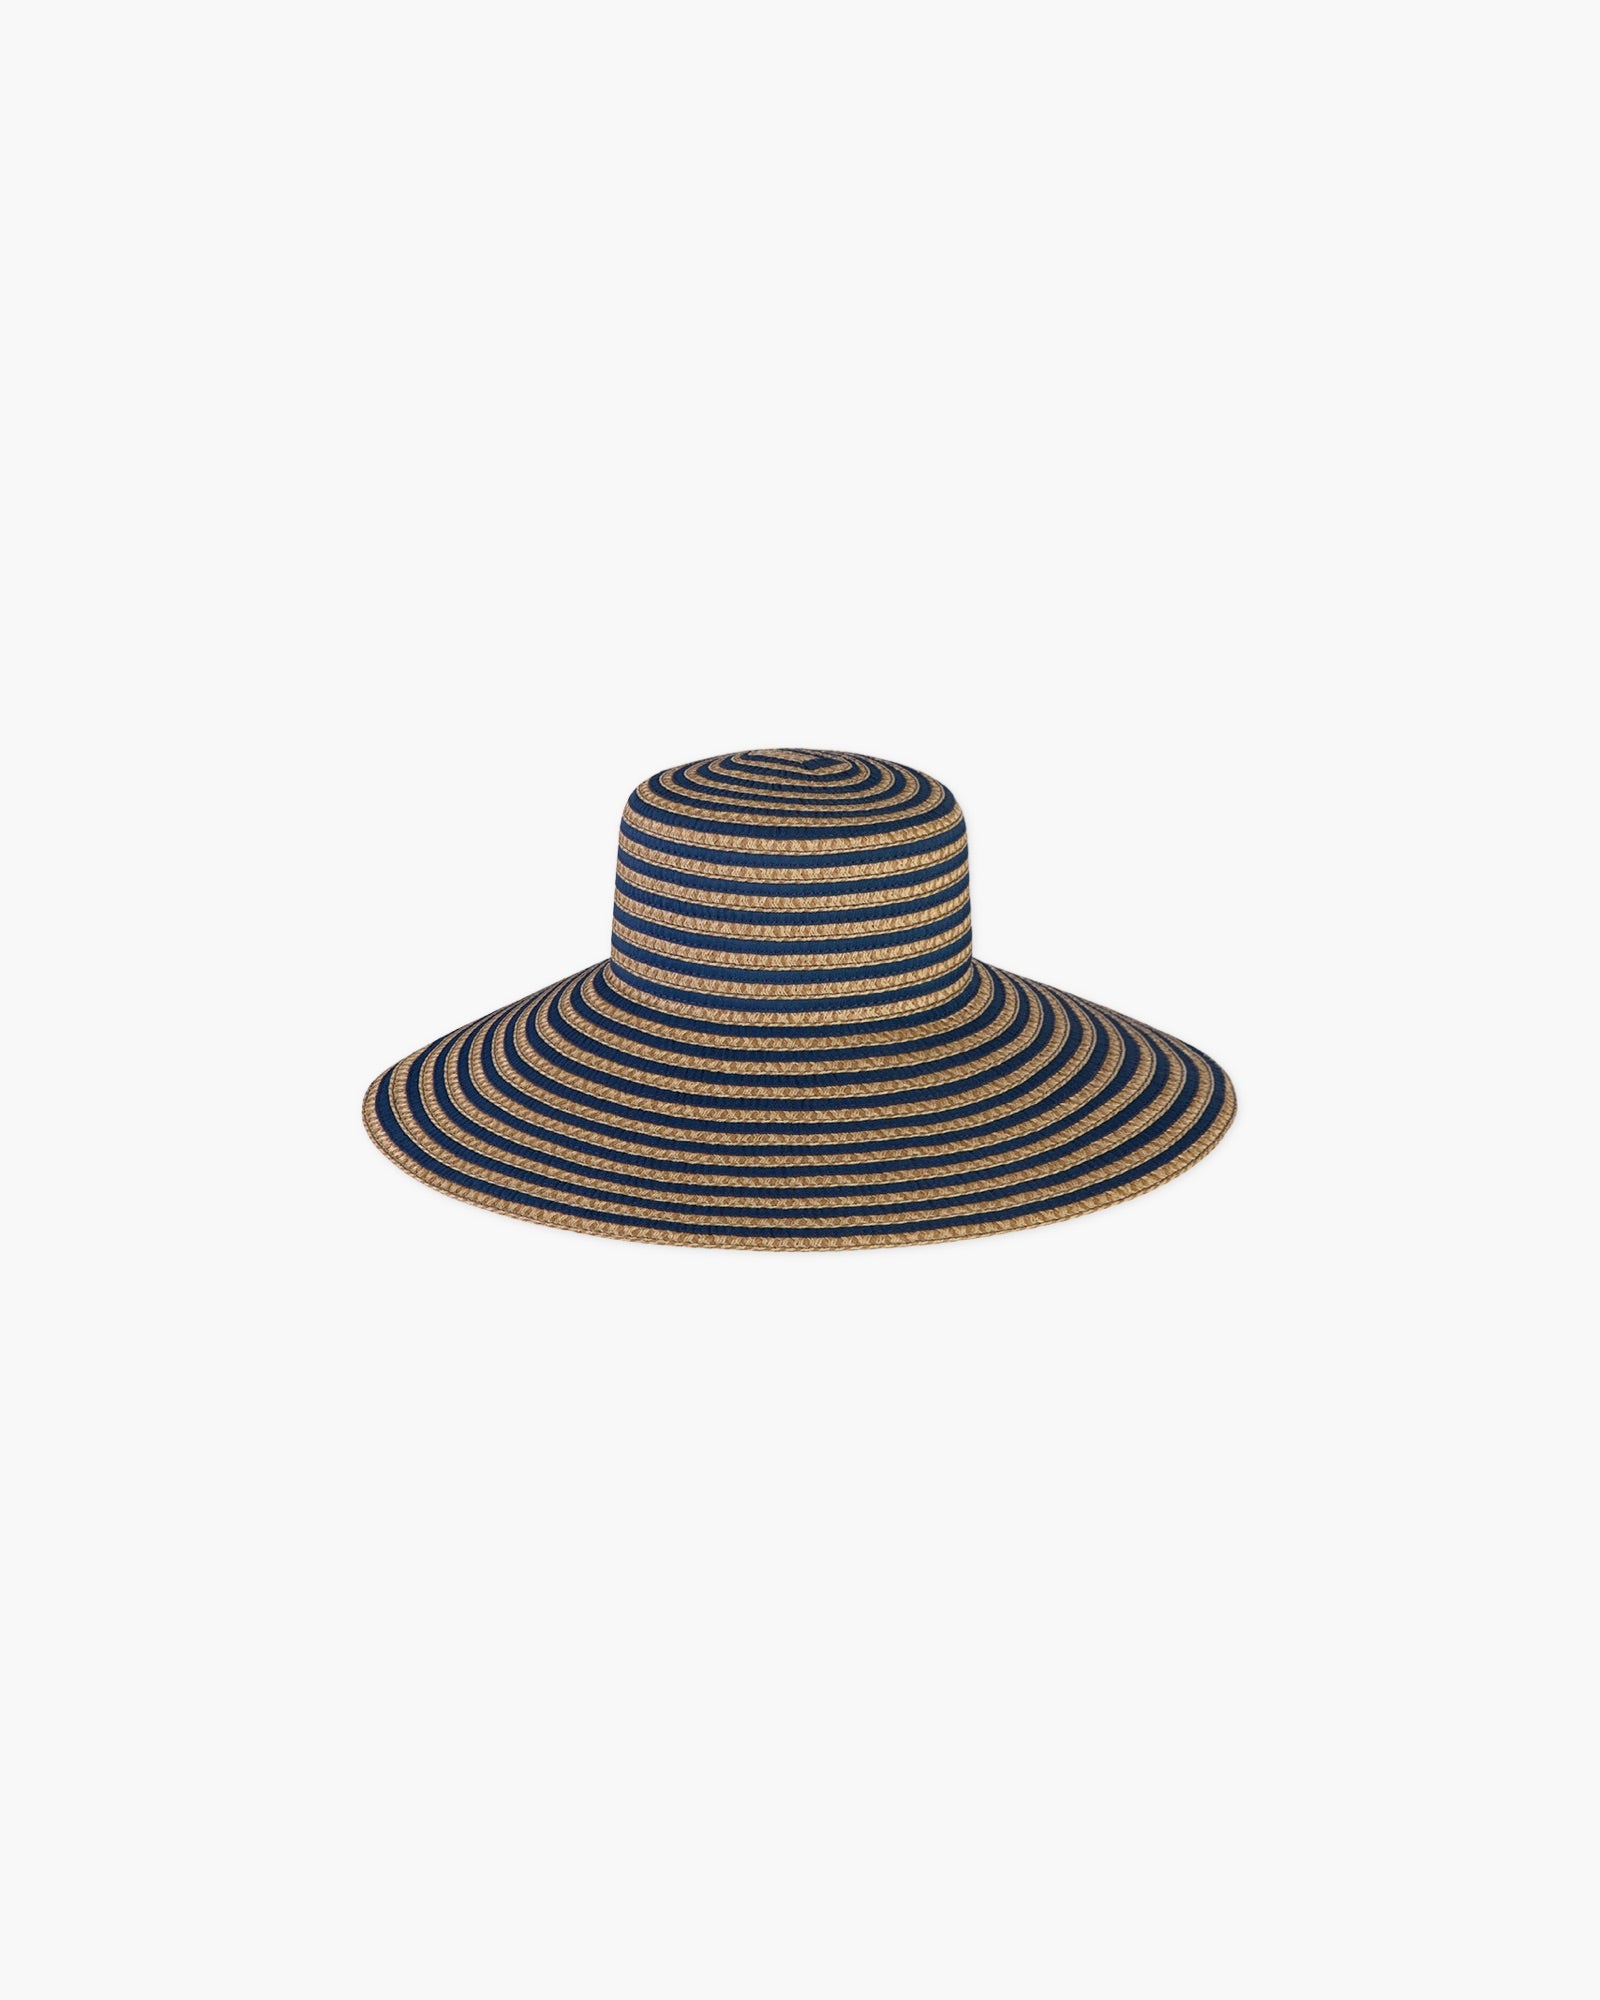 Margot Straw Hat | Women's Sun Hat for Sale | Eric Javits | Eric Javits